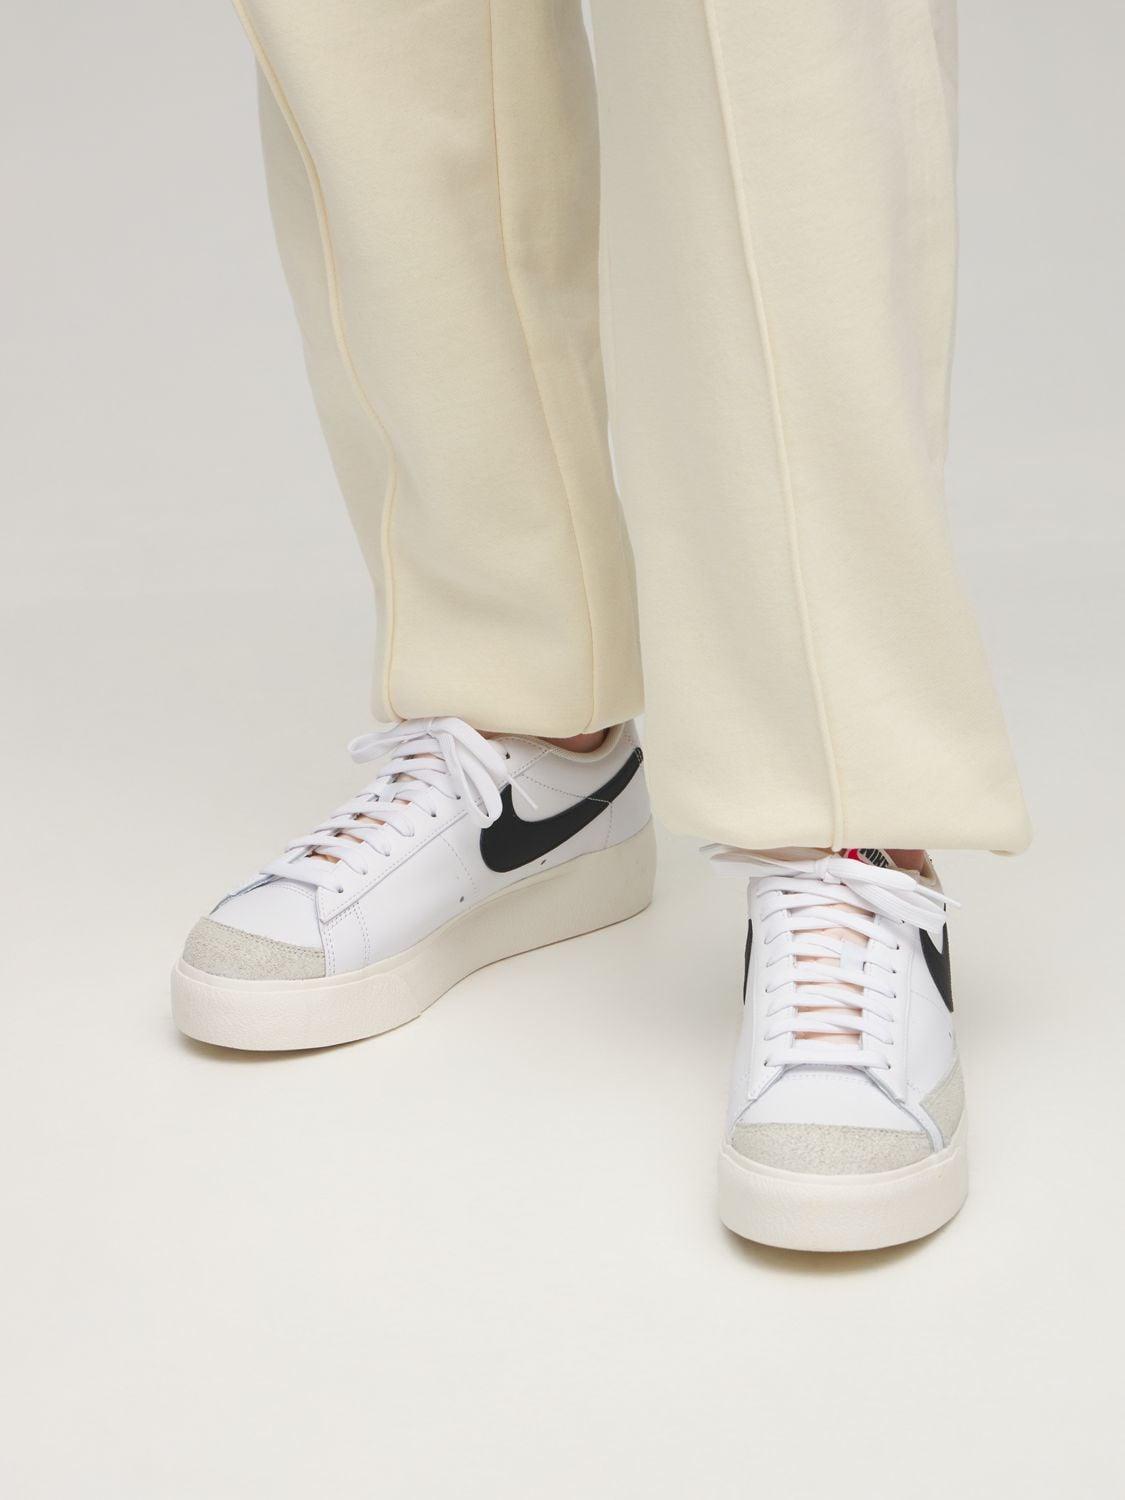 Nike Blazer Low Platform Sneakers in White,Black (White) - Lyst